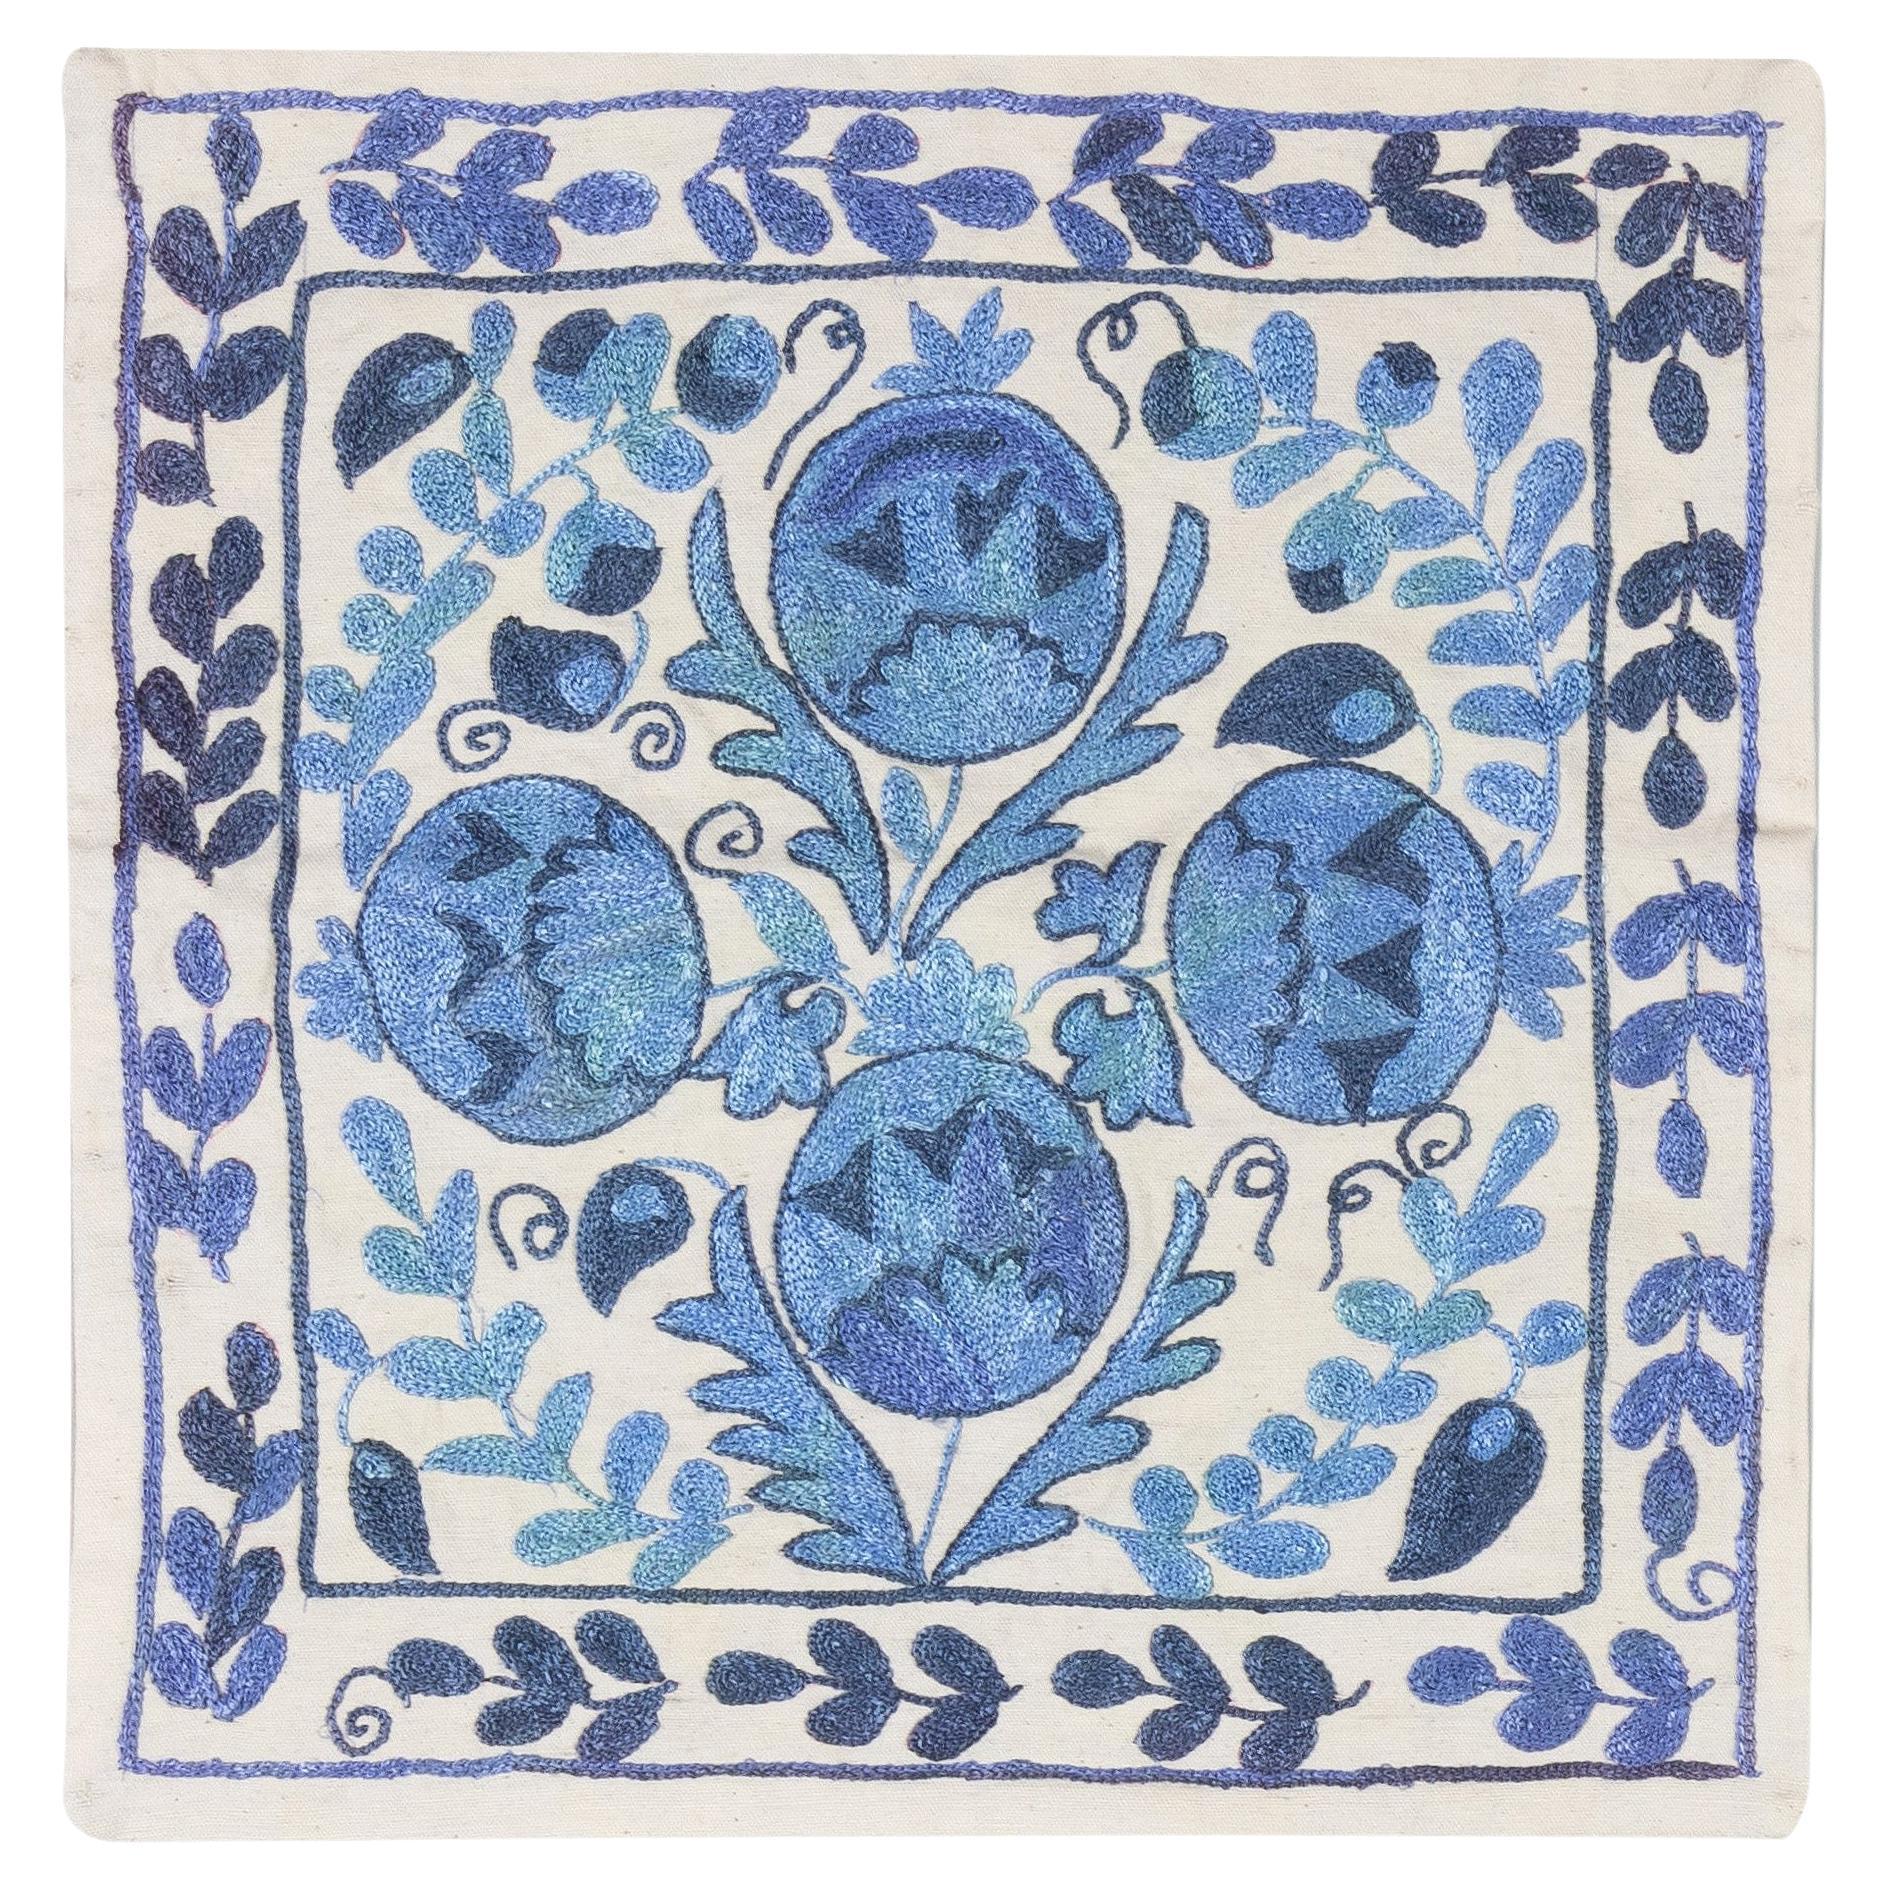 17 "x18" New Uzbek Silk Embroidered Suzani Cushion Cover in Cream & Blue Color